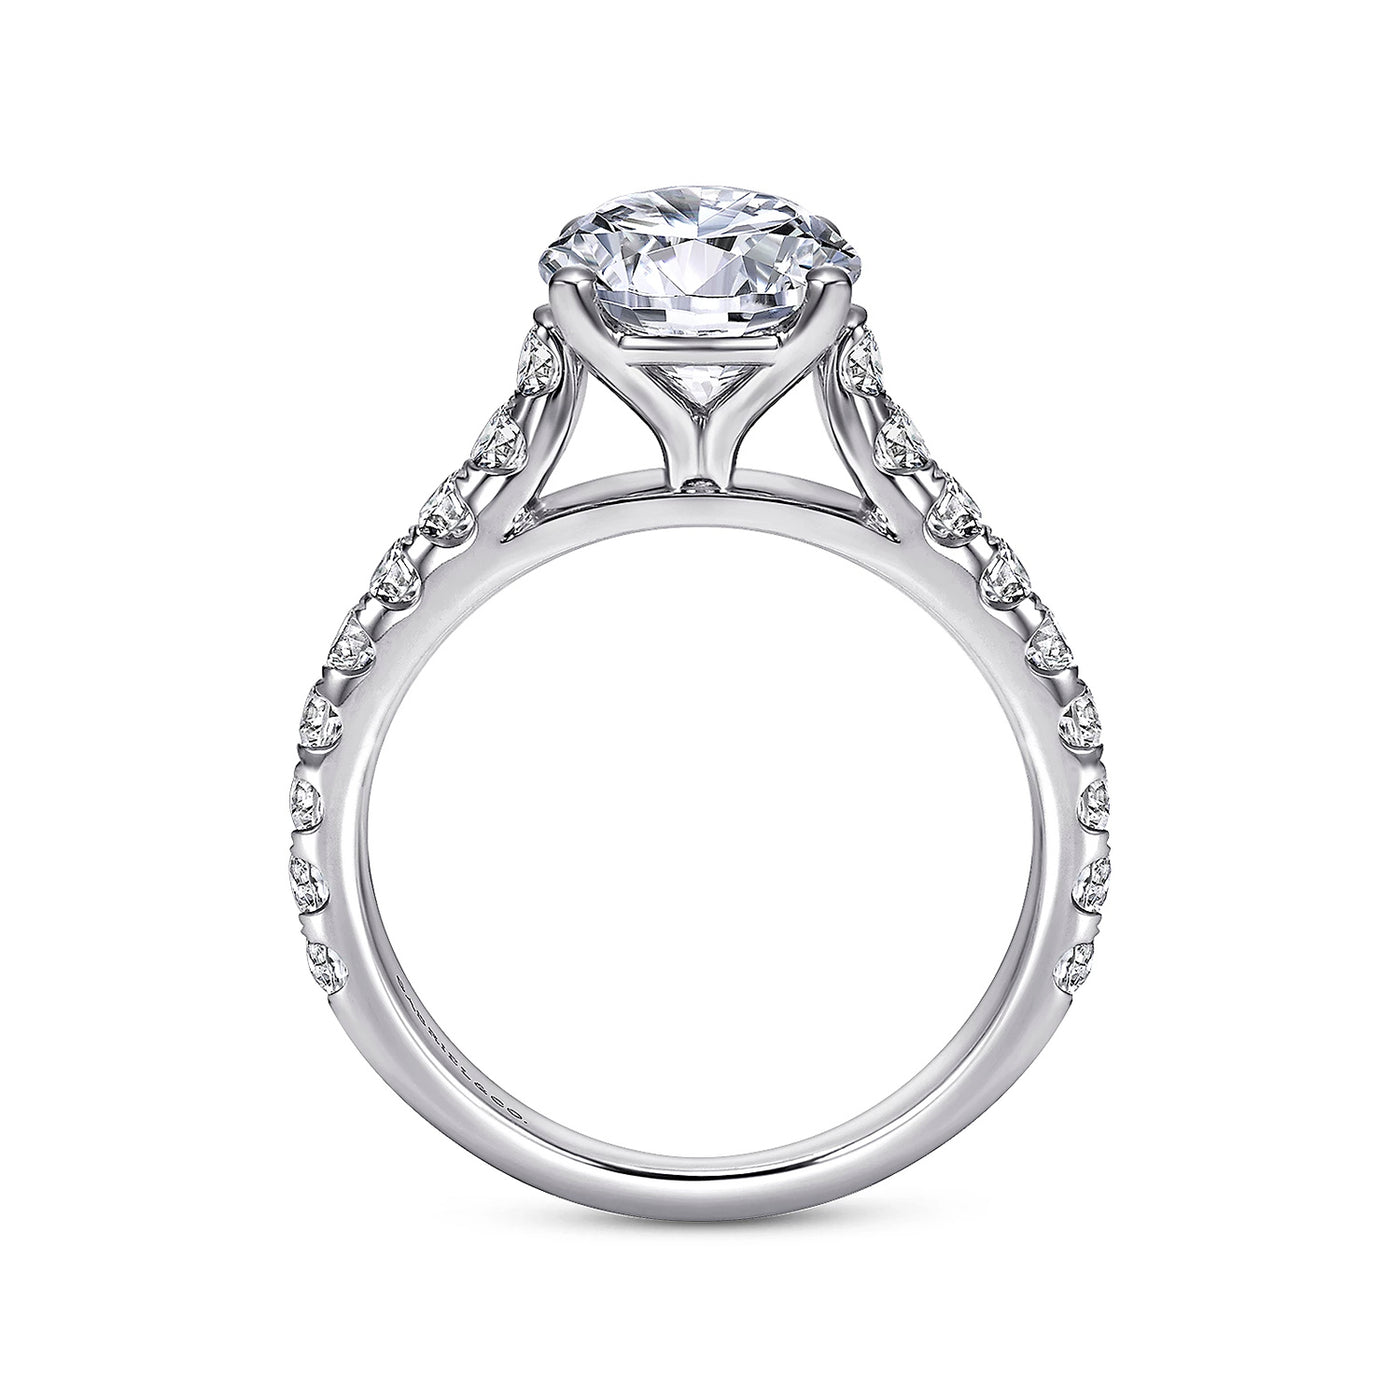 Gabriel & Co. 14k White Gold Solitaire Diamond Semi-Mount Engagement Ring – ER7016W44JJ.CSCZ